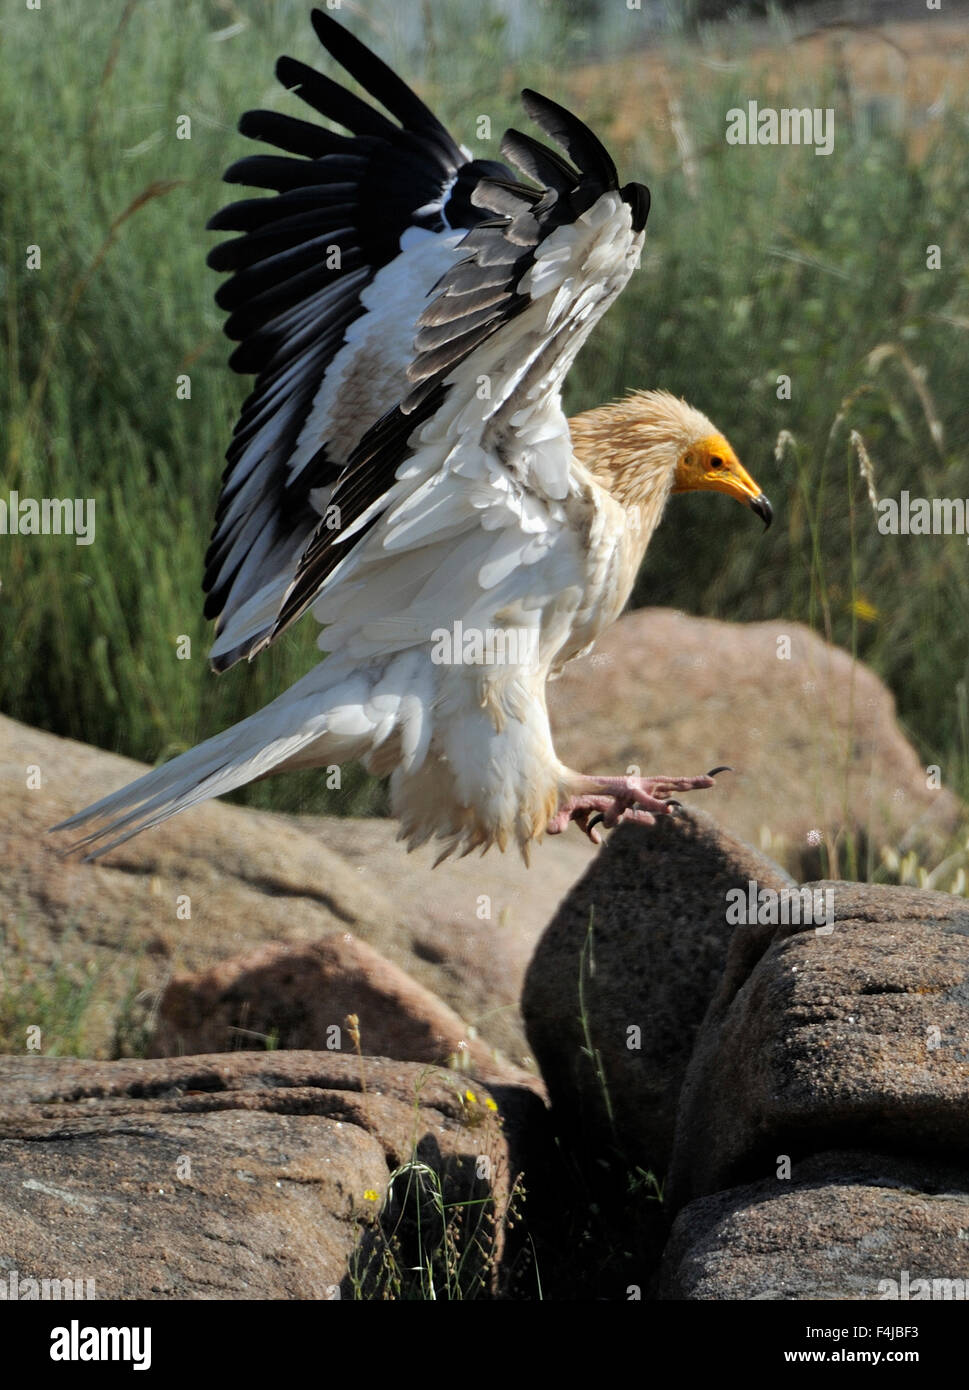 Egyptian vulture (Neophron percnopterus) landing, Faia Brava Reserve, Coa valley, Portugal, May Stock Photo